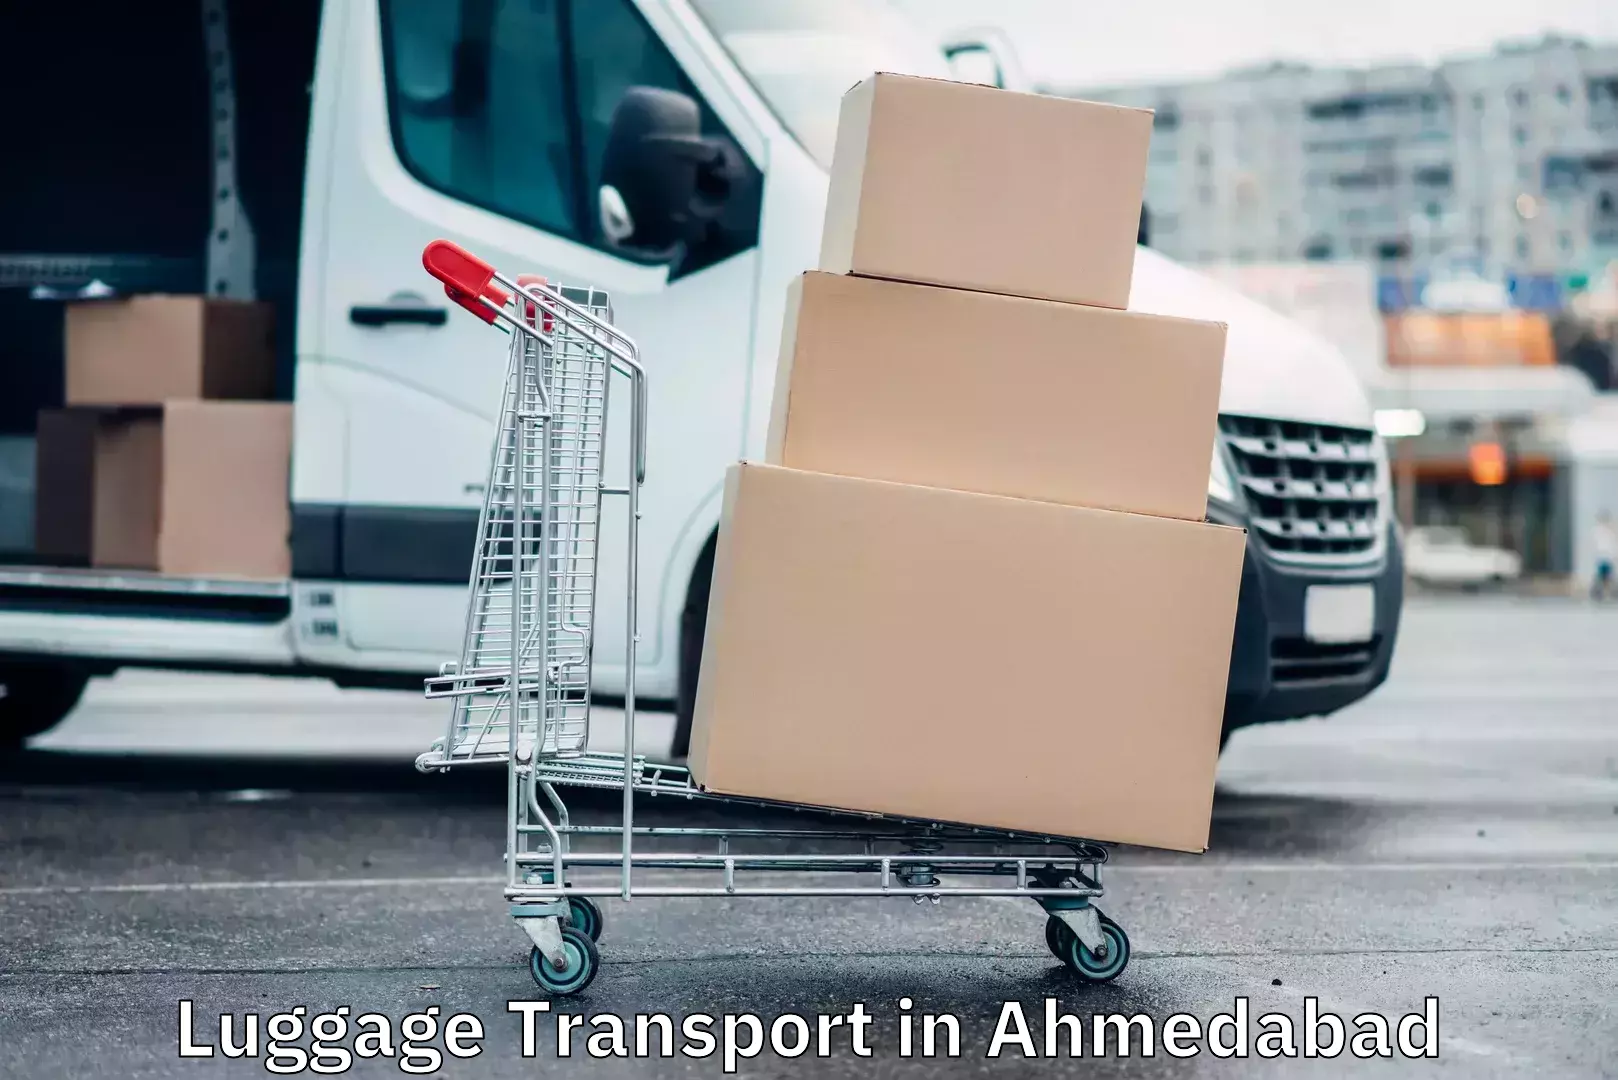 Rural baggage transport in Ahmedabad